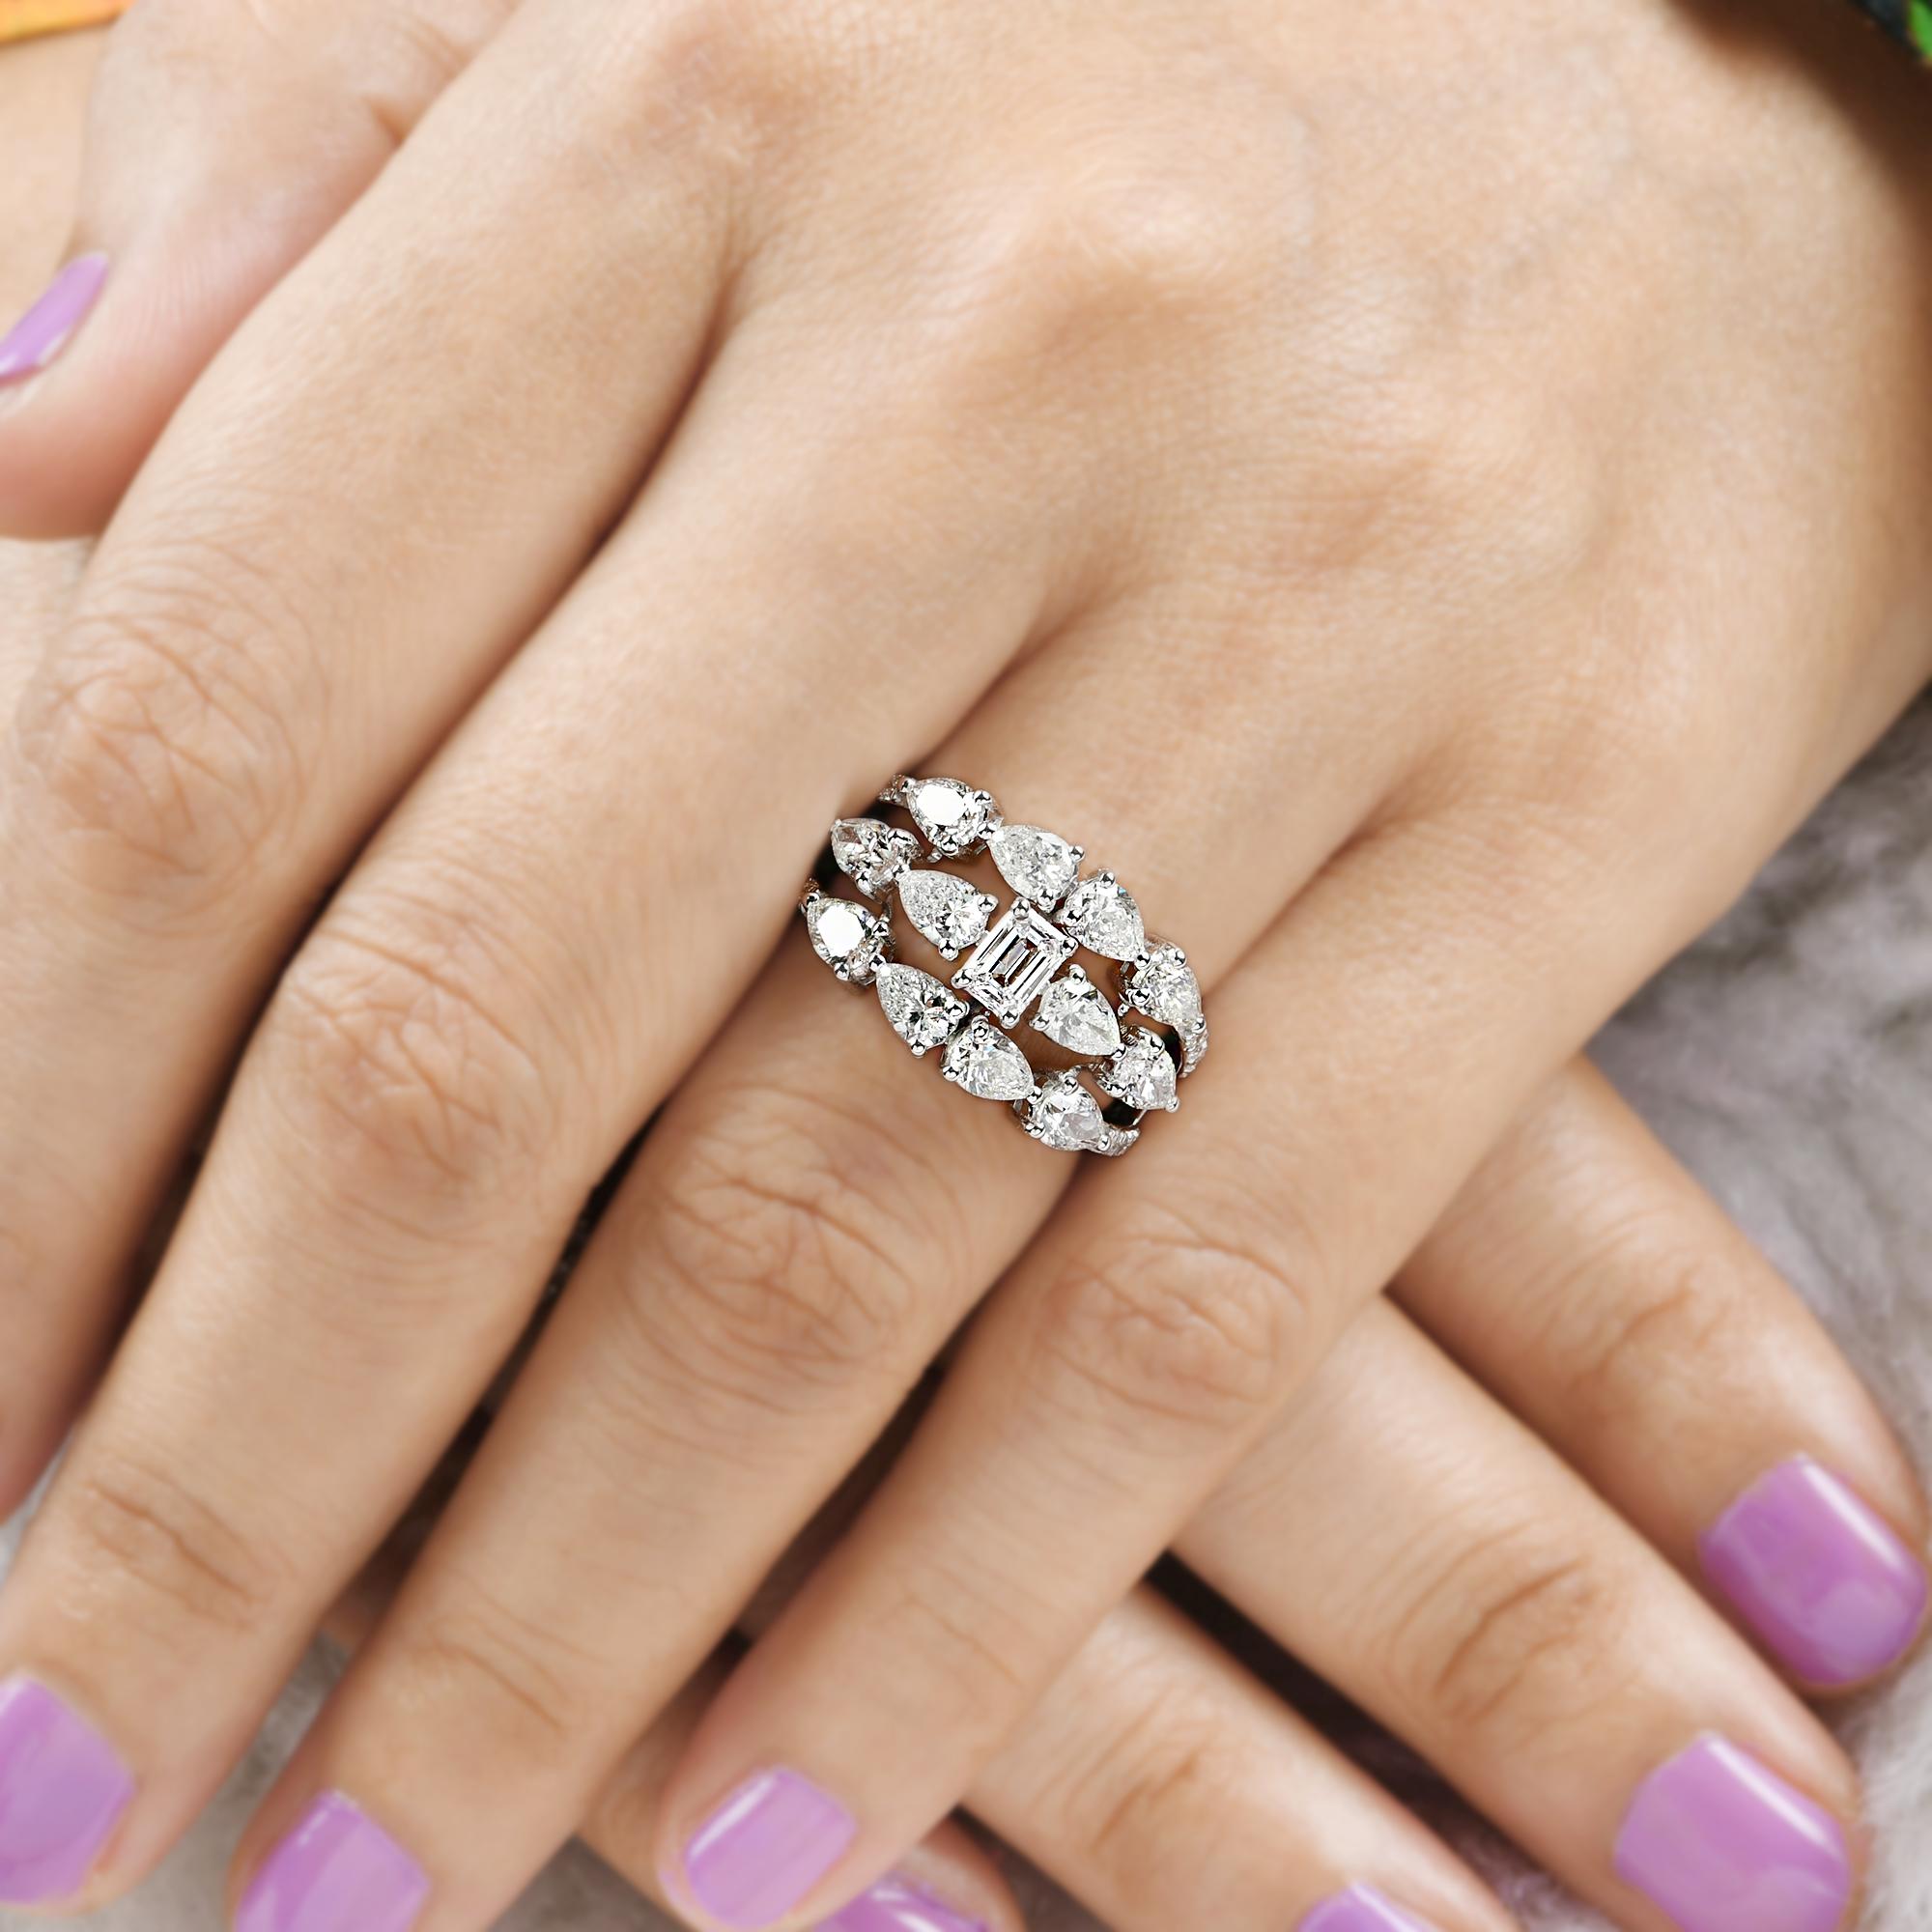 For Sale:  2.75 Carat SI Clarity HI Color Pear Emerald Cut Diamond Ring 18 Karat White Gold 3